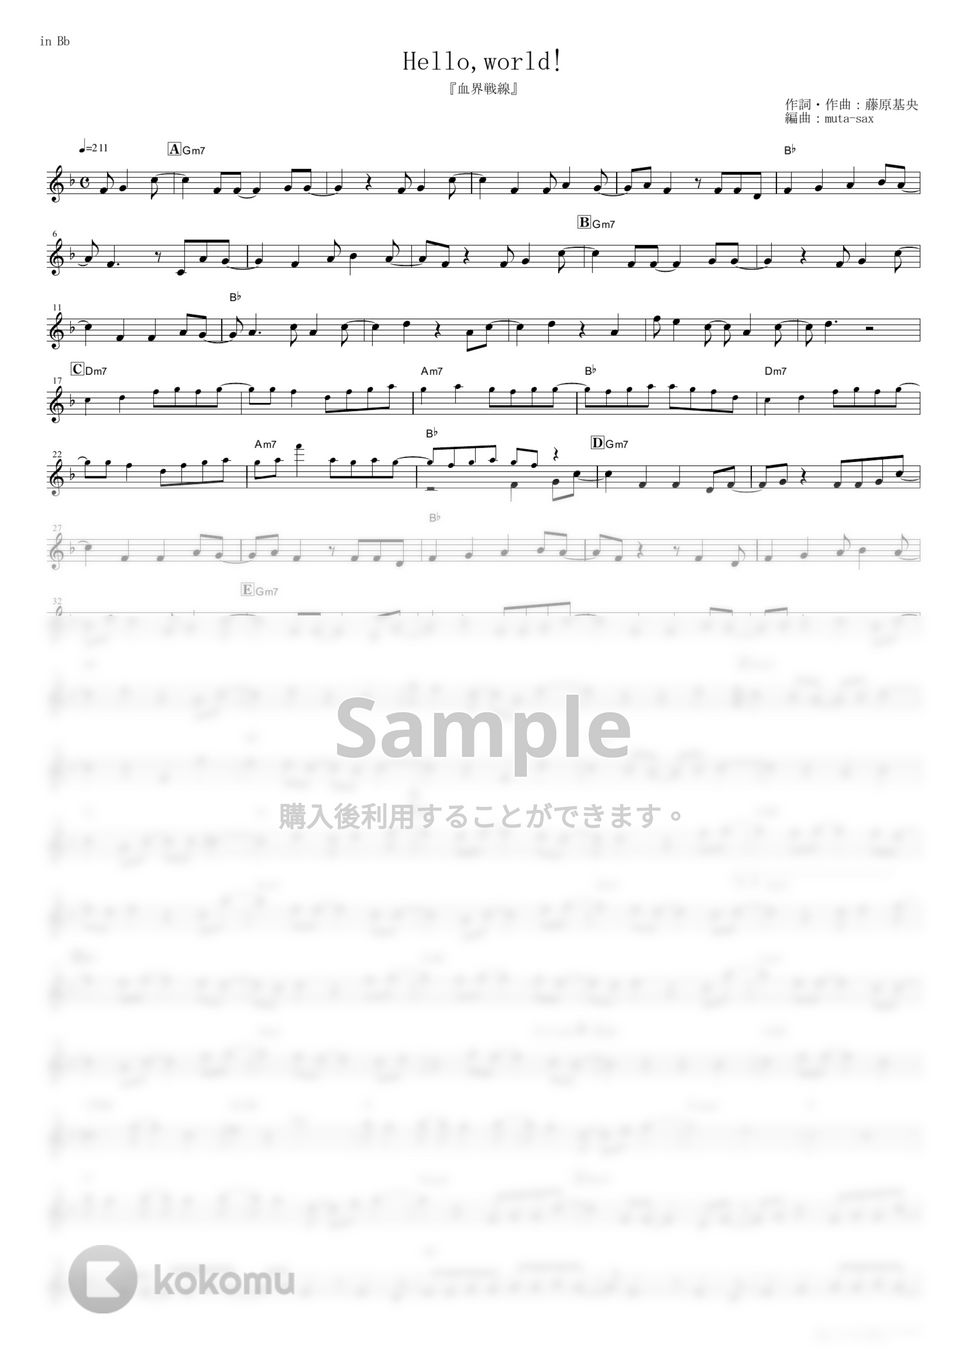 BUMP OF CHICKEN - Hello,world! (『血界戦線』 / in Bb) by muta-sax